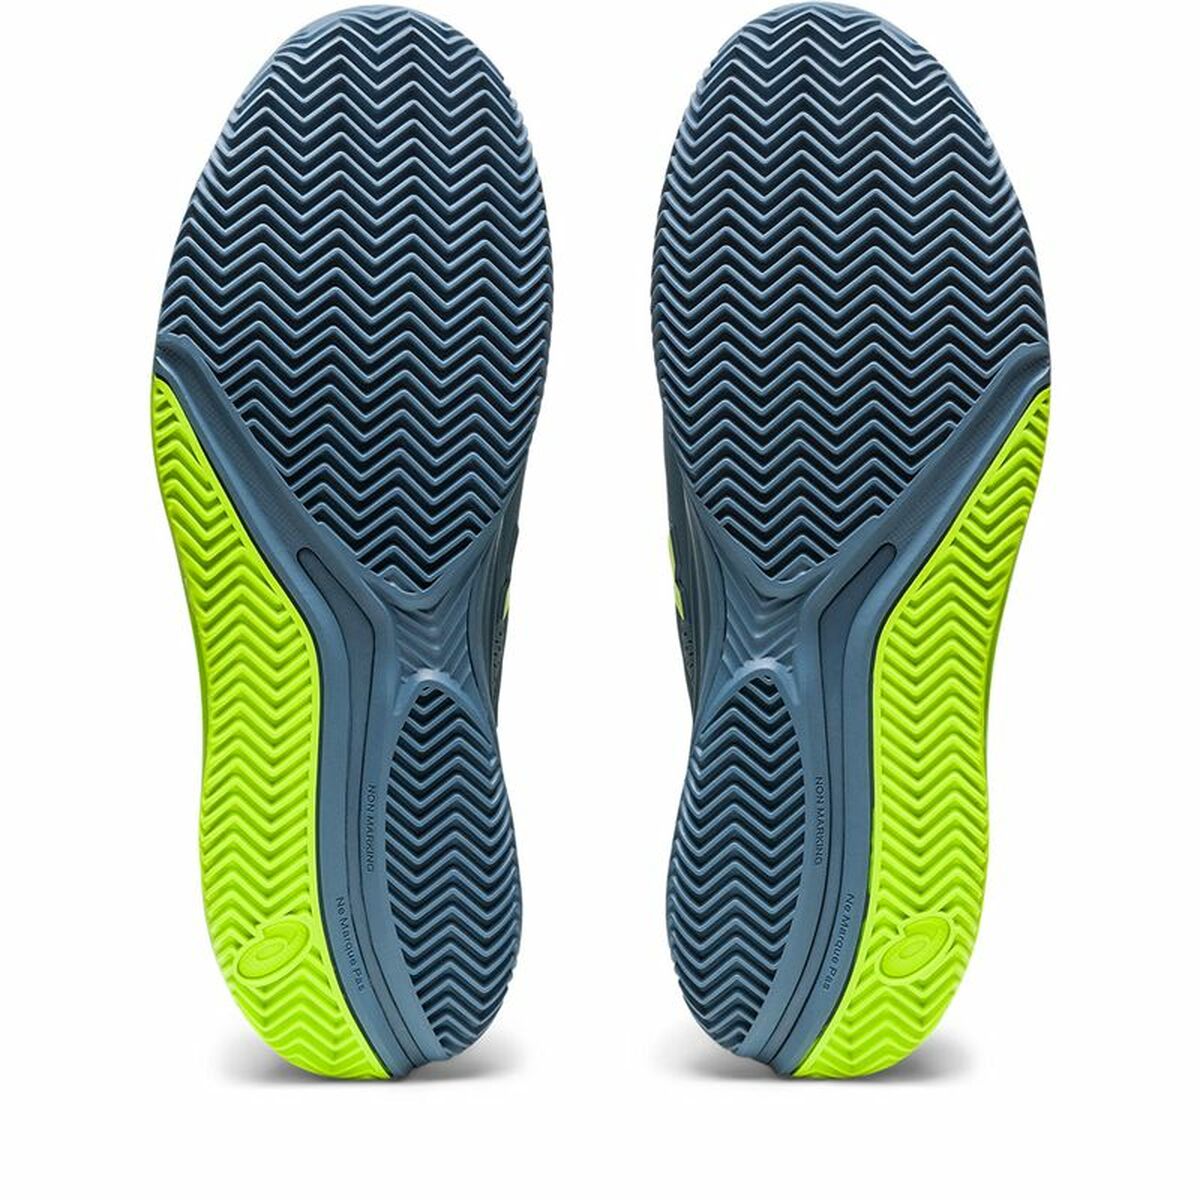 Chaussures de Tennis pour Homme Asics Gel-Resolution 9 Bleu Homme